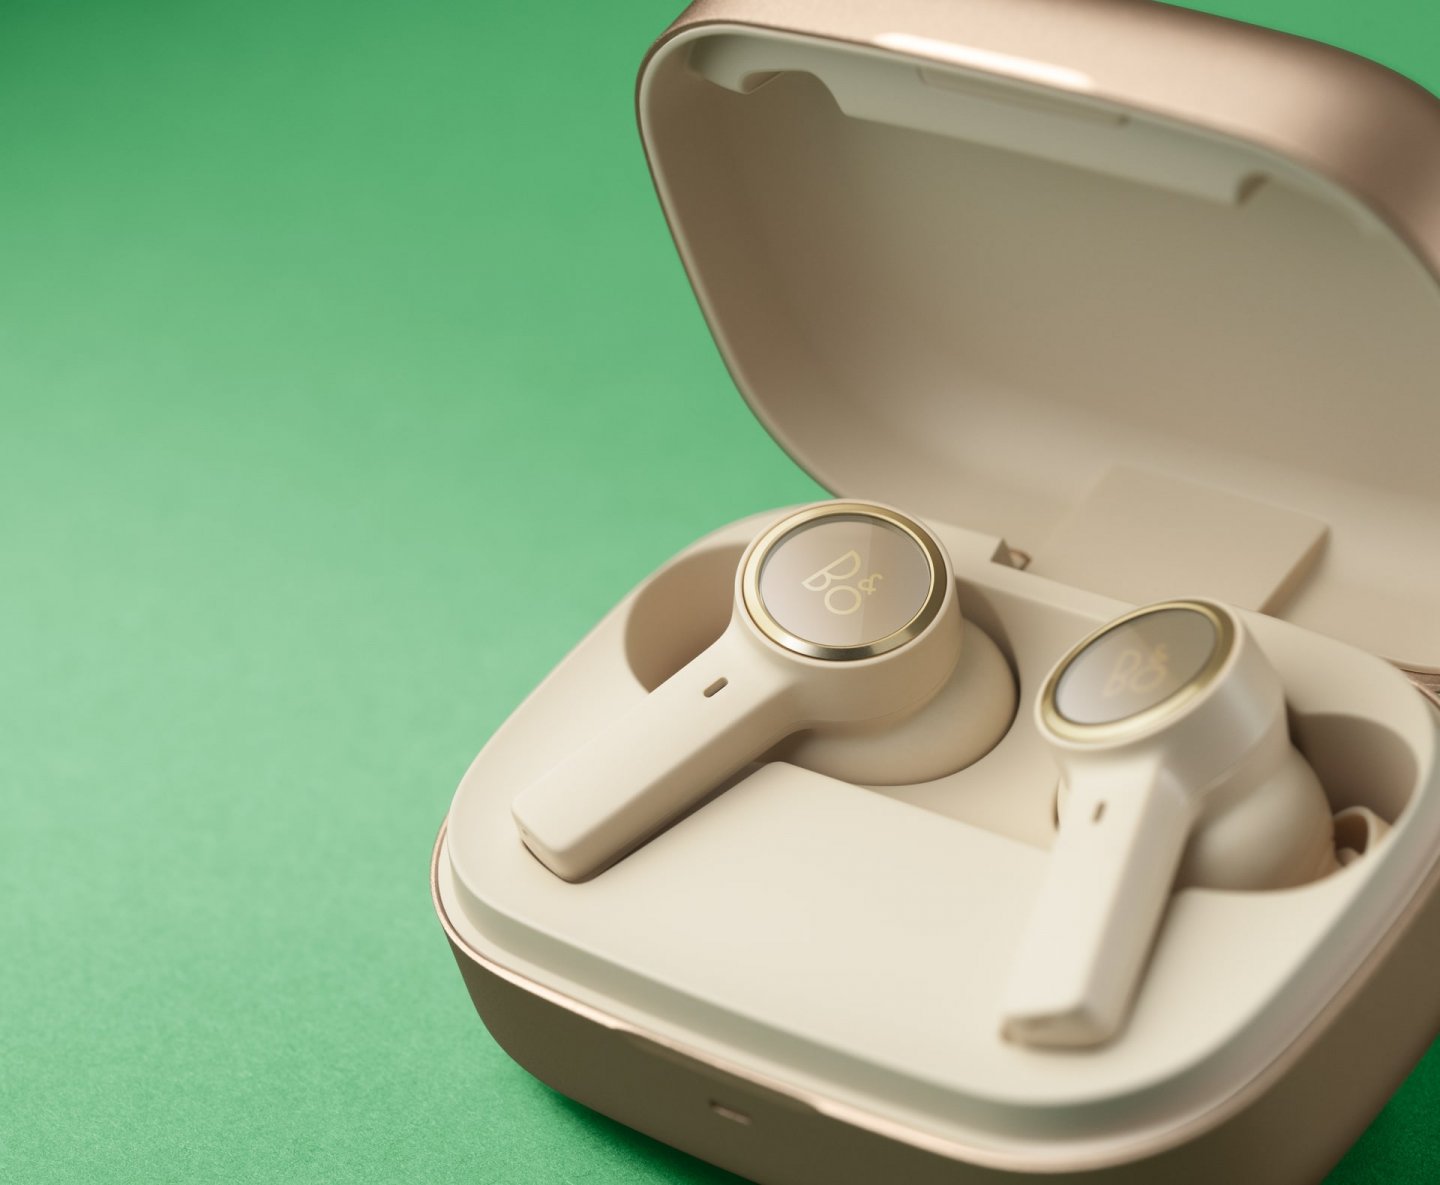 Bang & Olufsen 推出真無線入耳式耳機 Beoplay EX，具備主動降噪功能